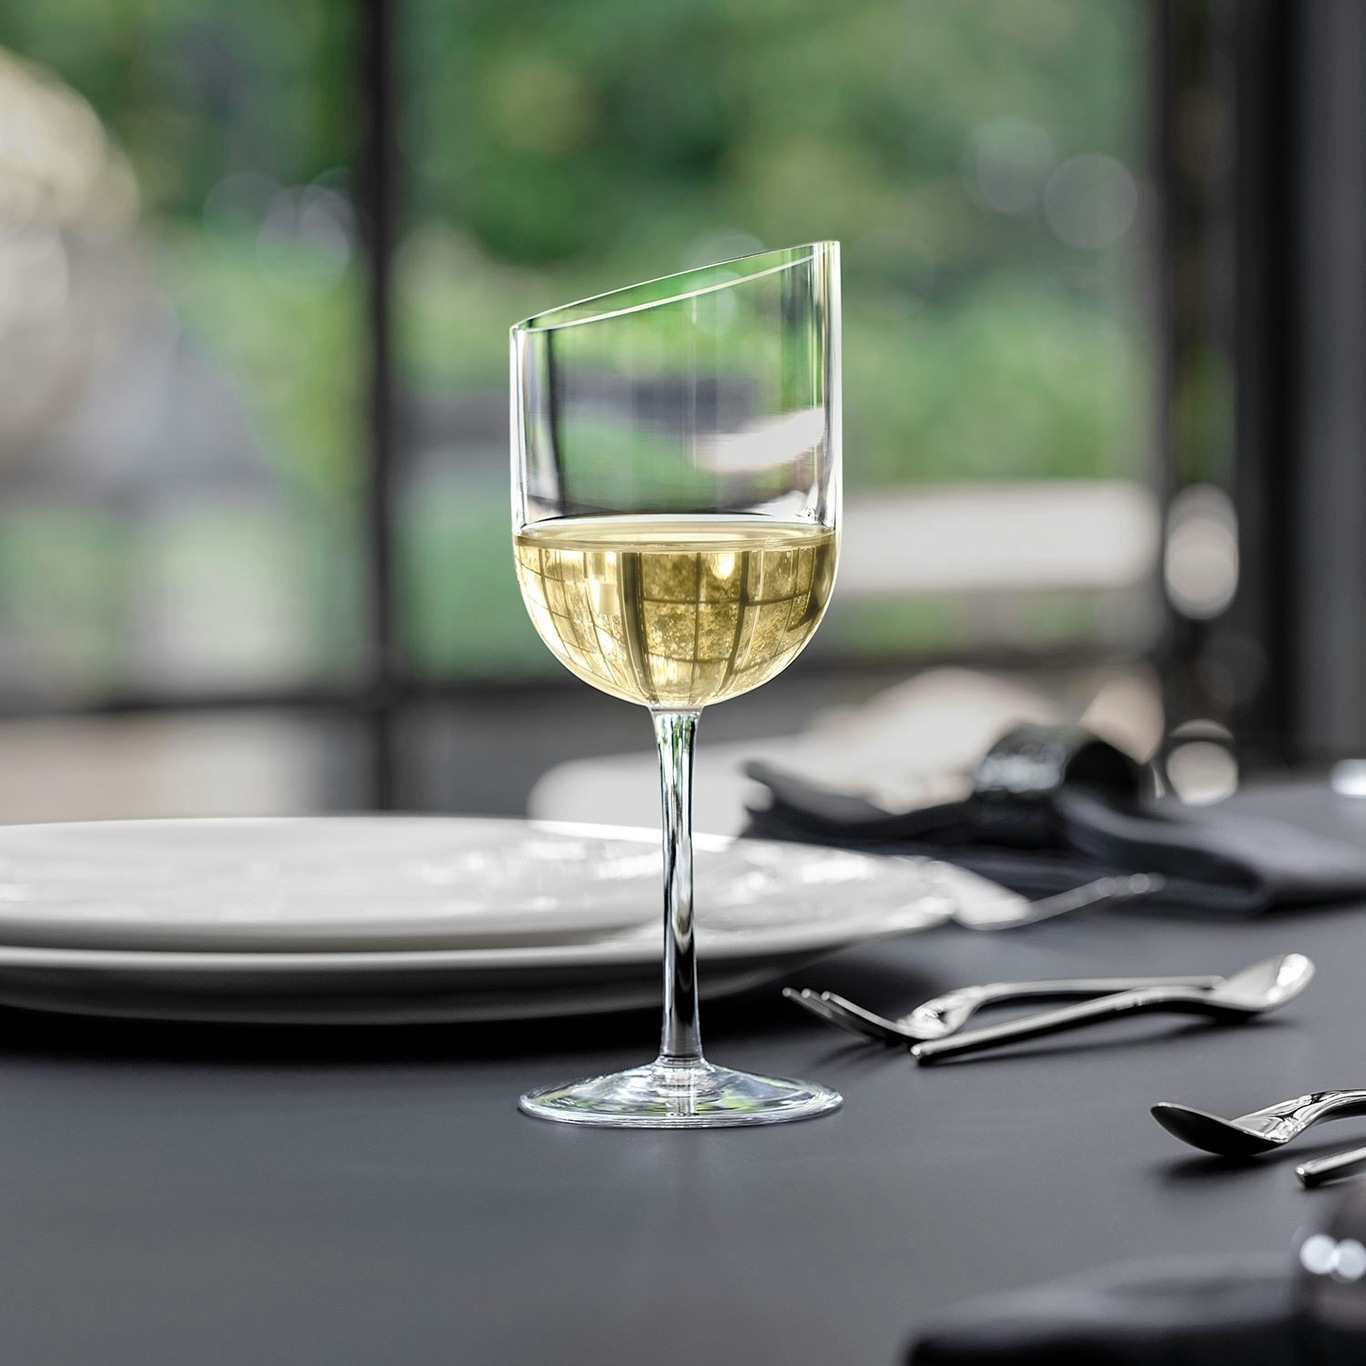 https://royaldesign.com/image/2/villeroy-boch-newmoon-white-wine-glass-30-cl-4-pcs-1?w=800&quality=80